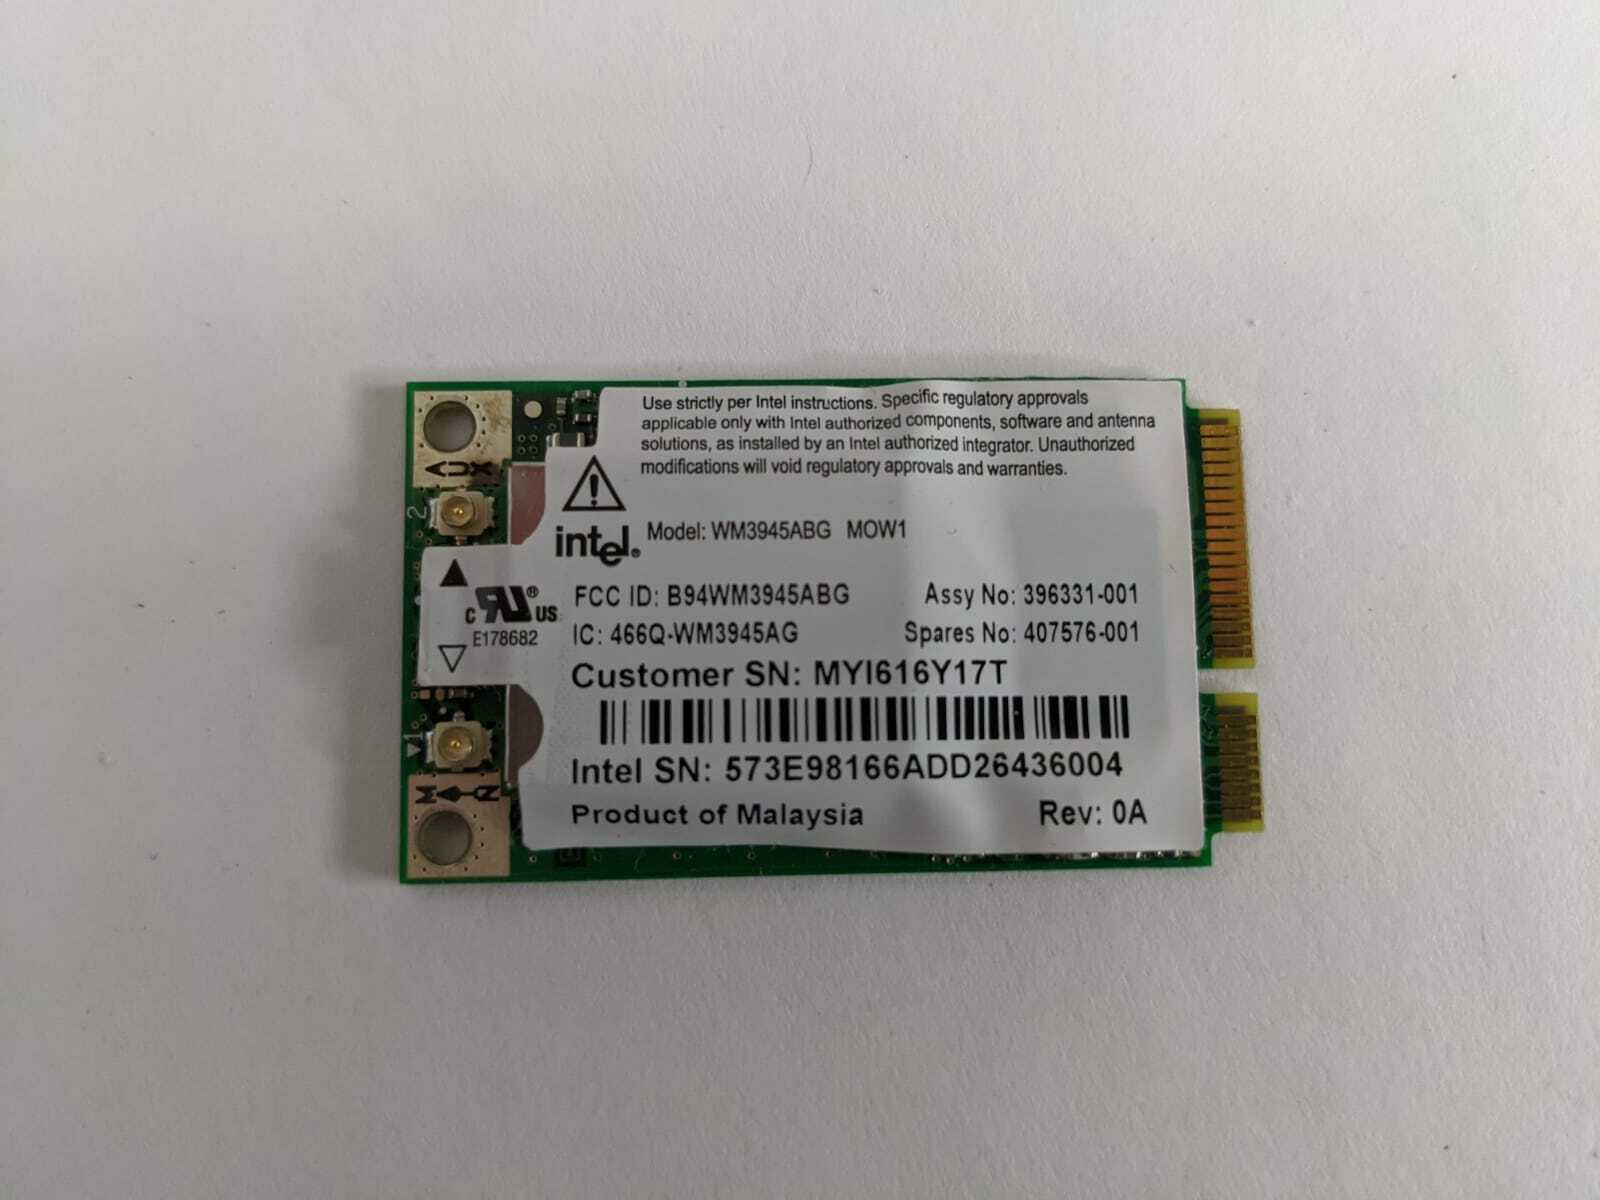 Intel Wireless WiFi WM3945ABG MOW1 Mini PCle Network Card